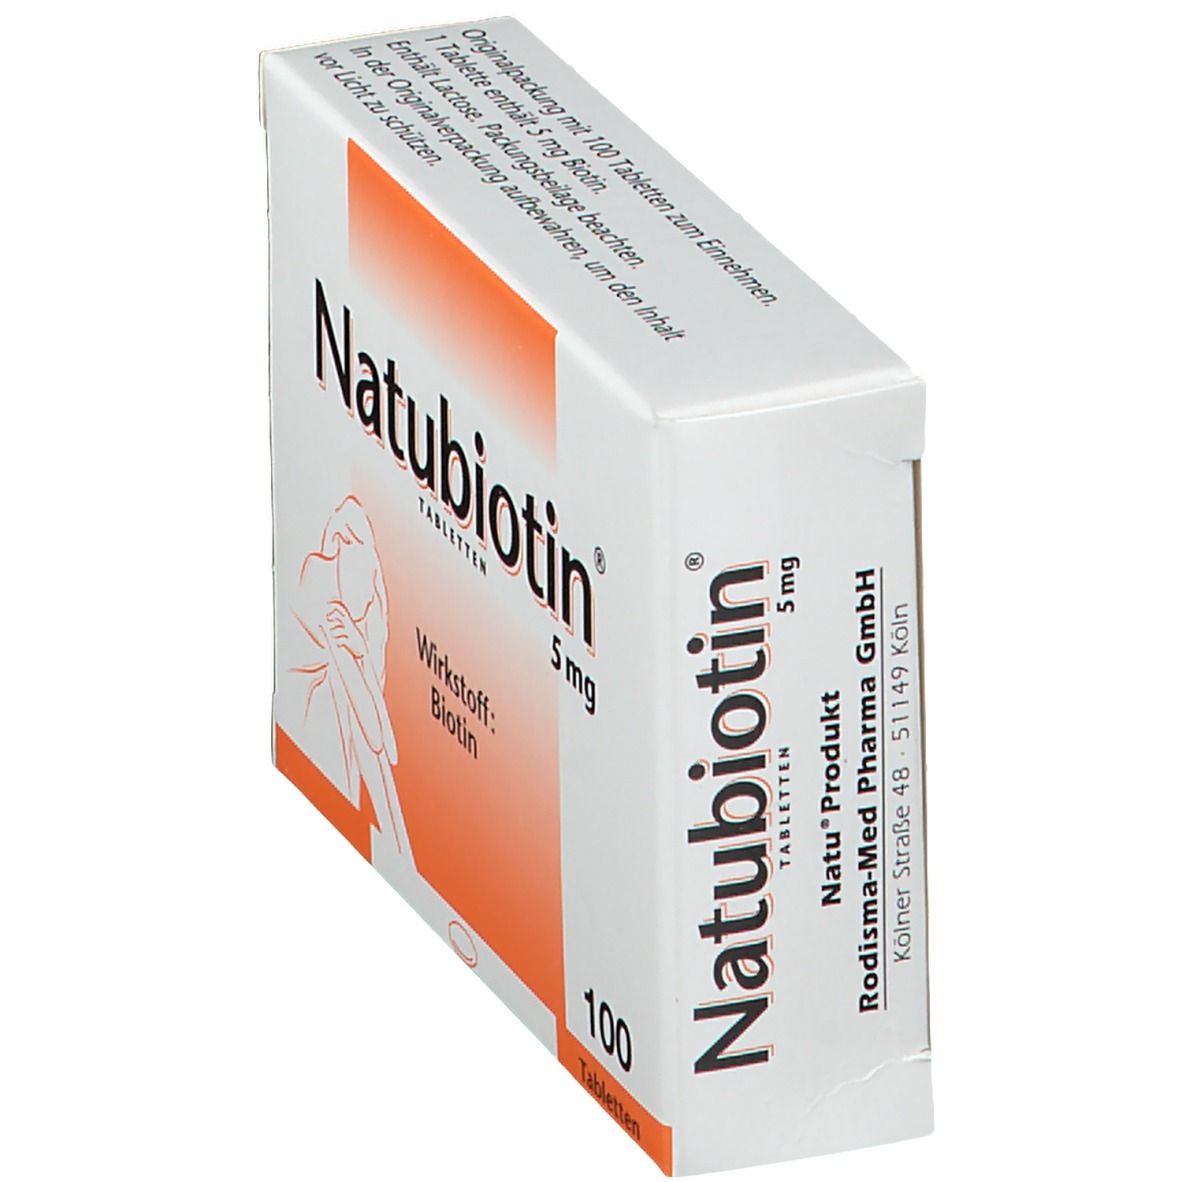 Natubiotin®